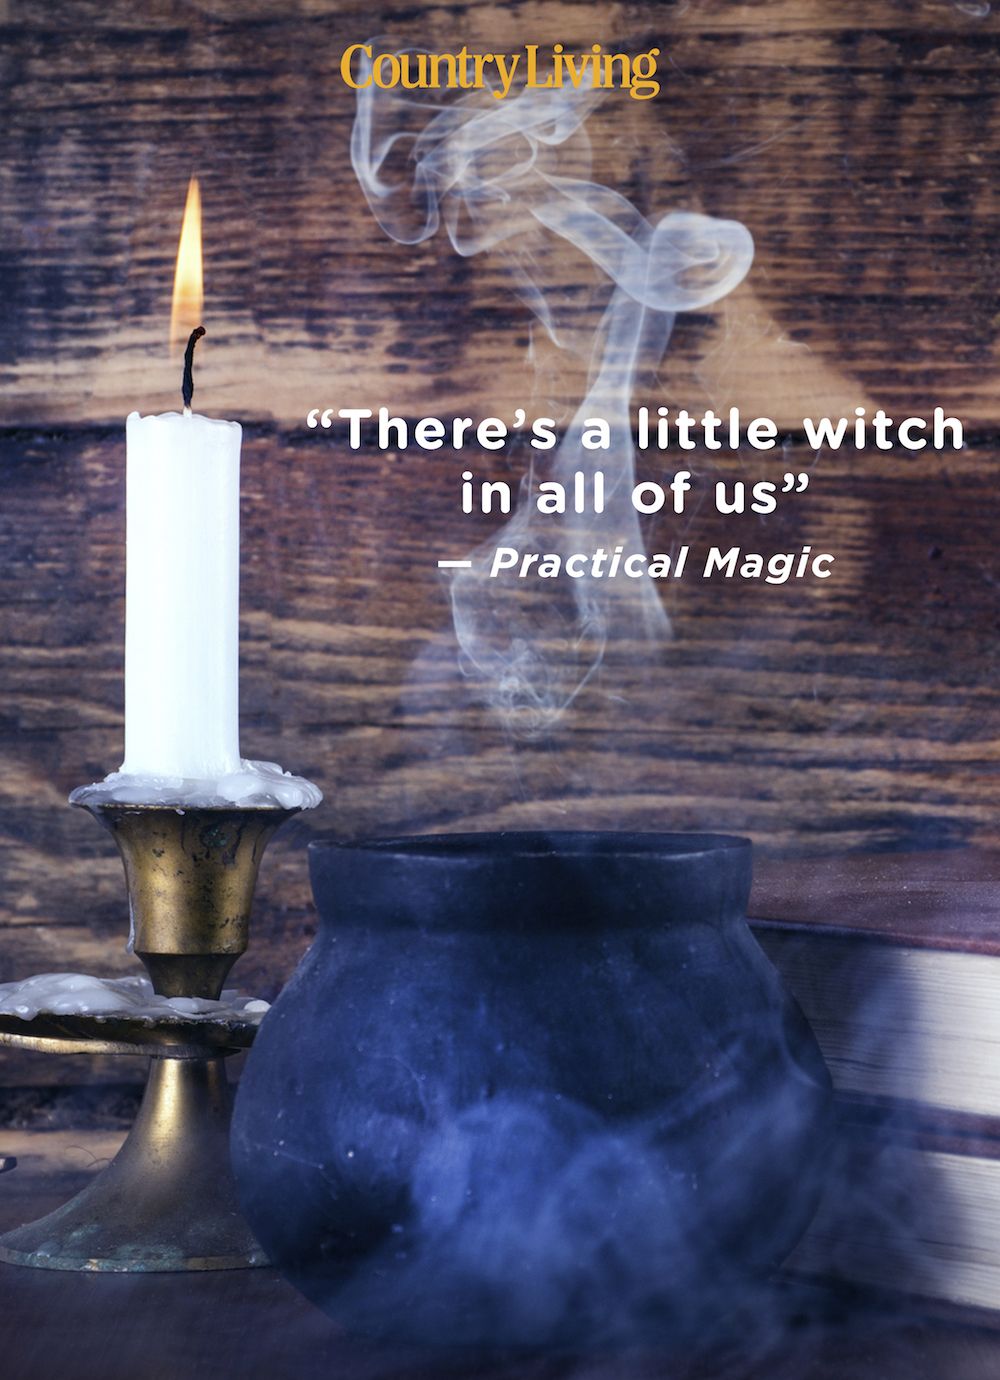 macbeth witches quotes